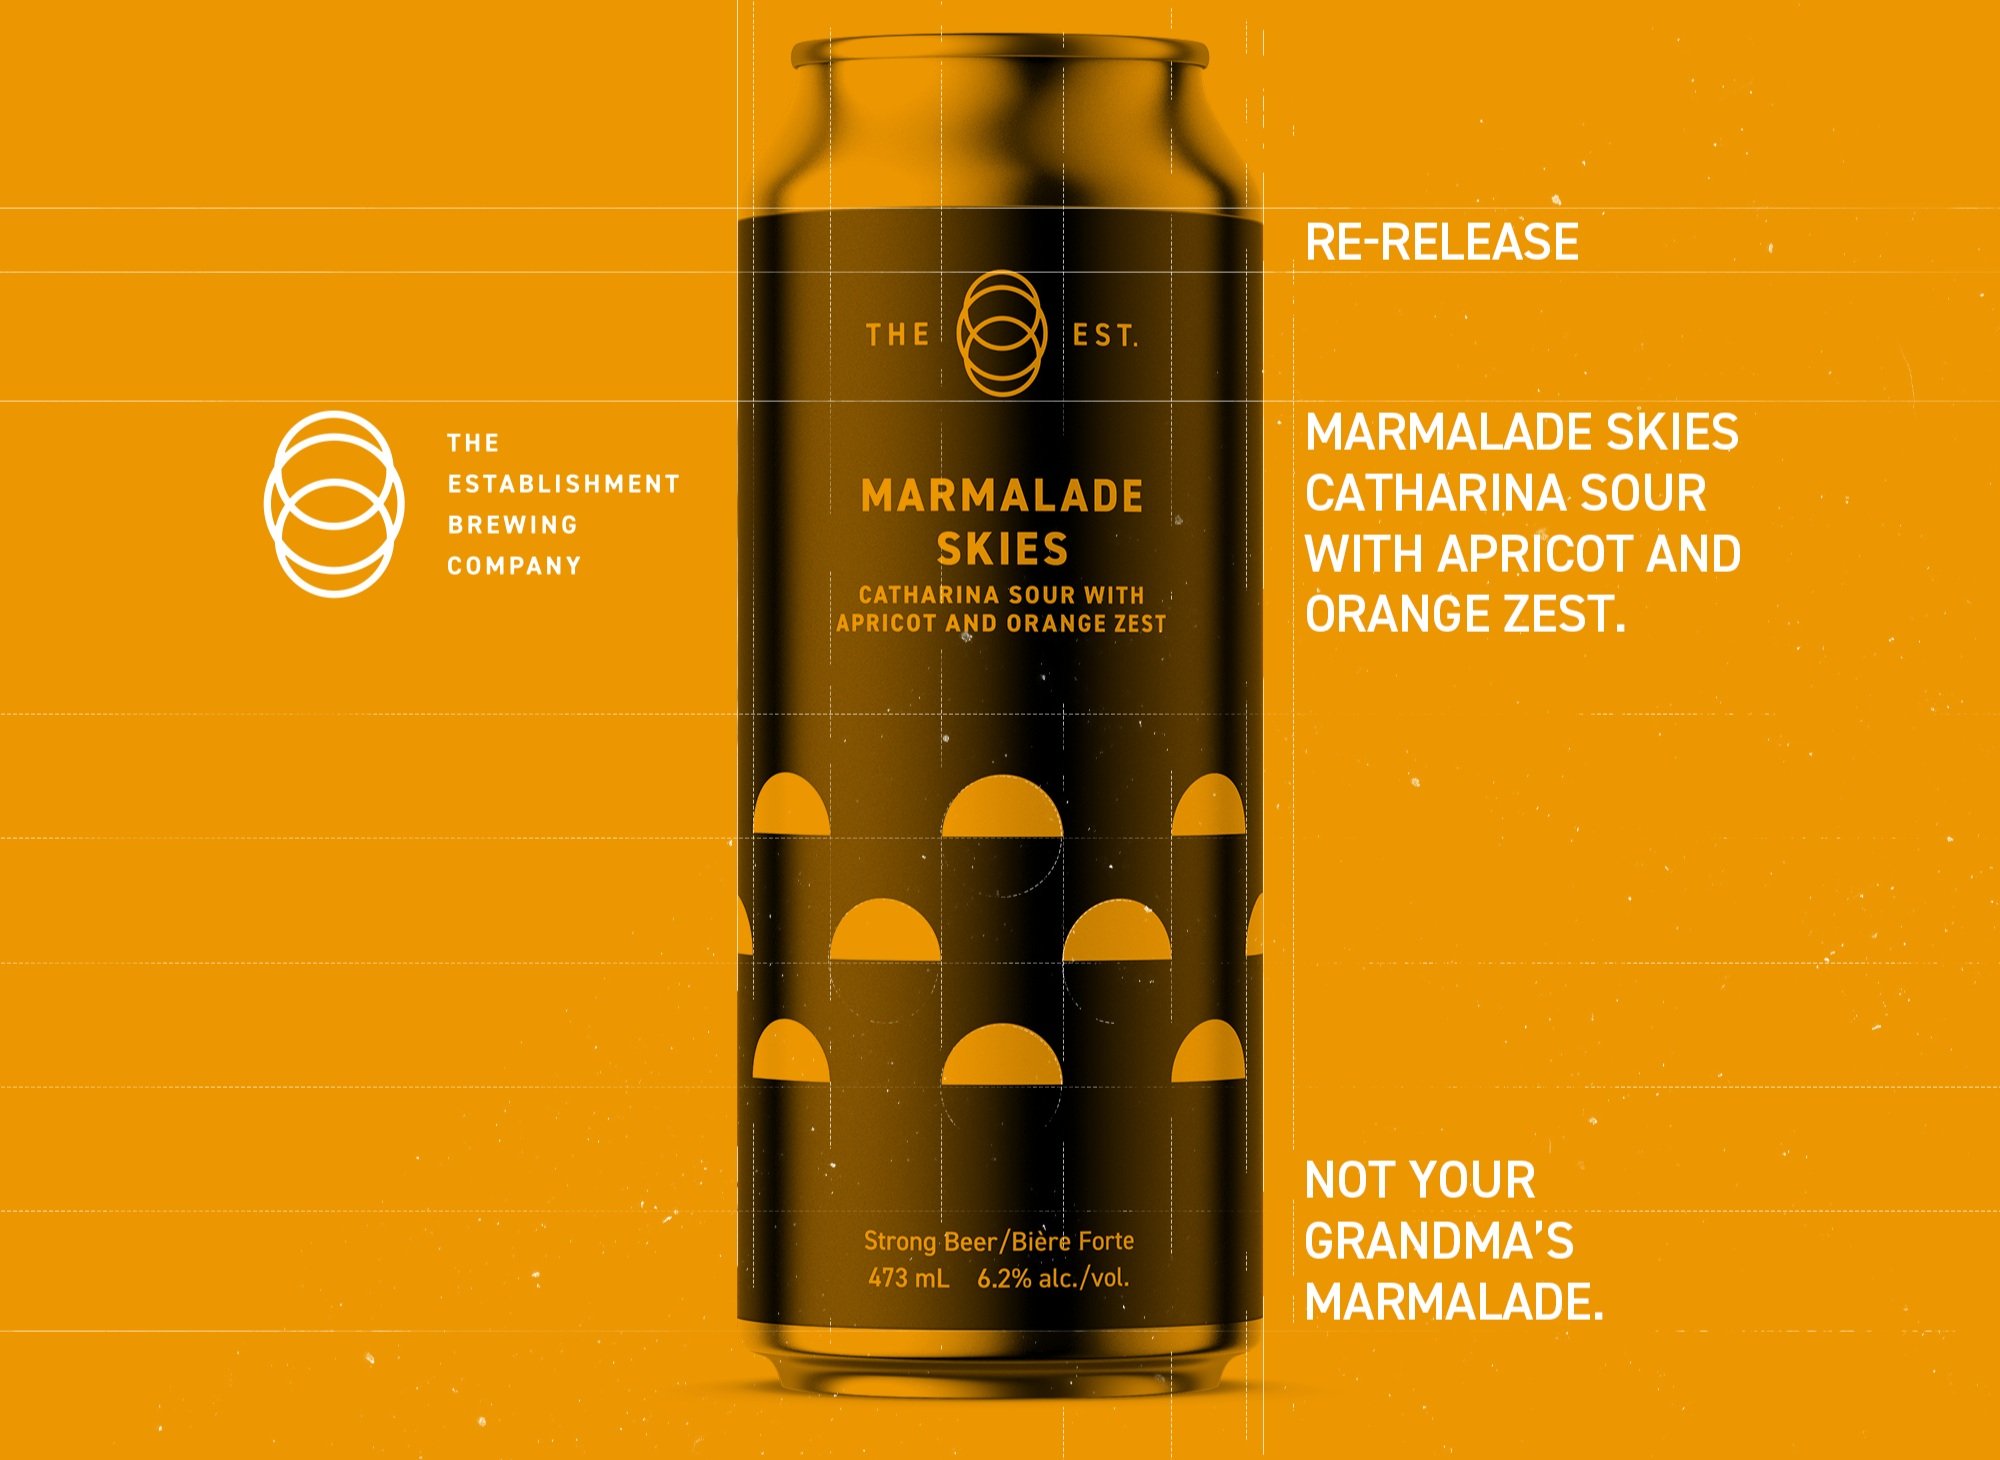 Feature: Marmalade Skies — The Establishment Brewing Company